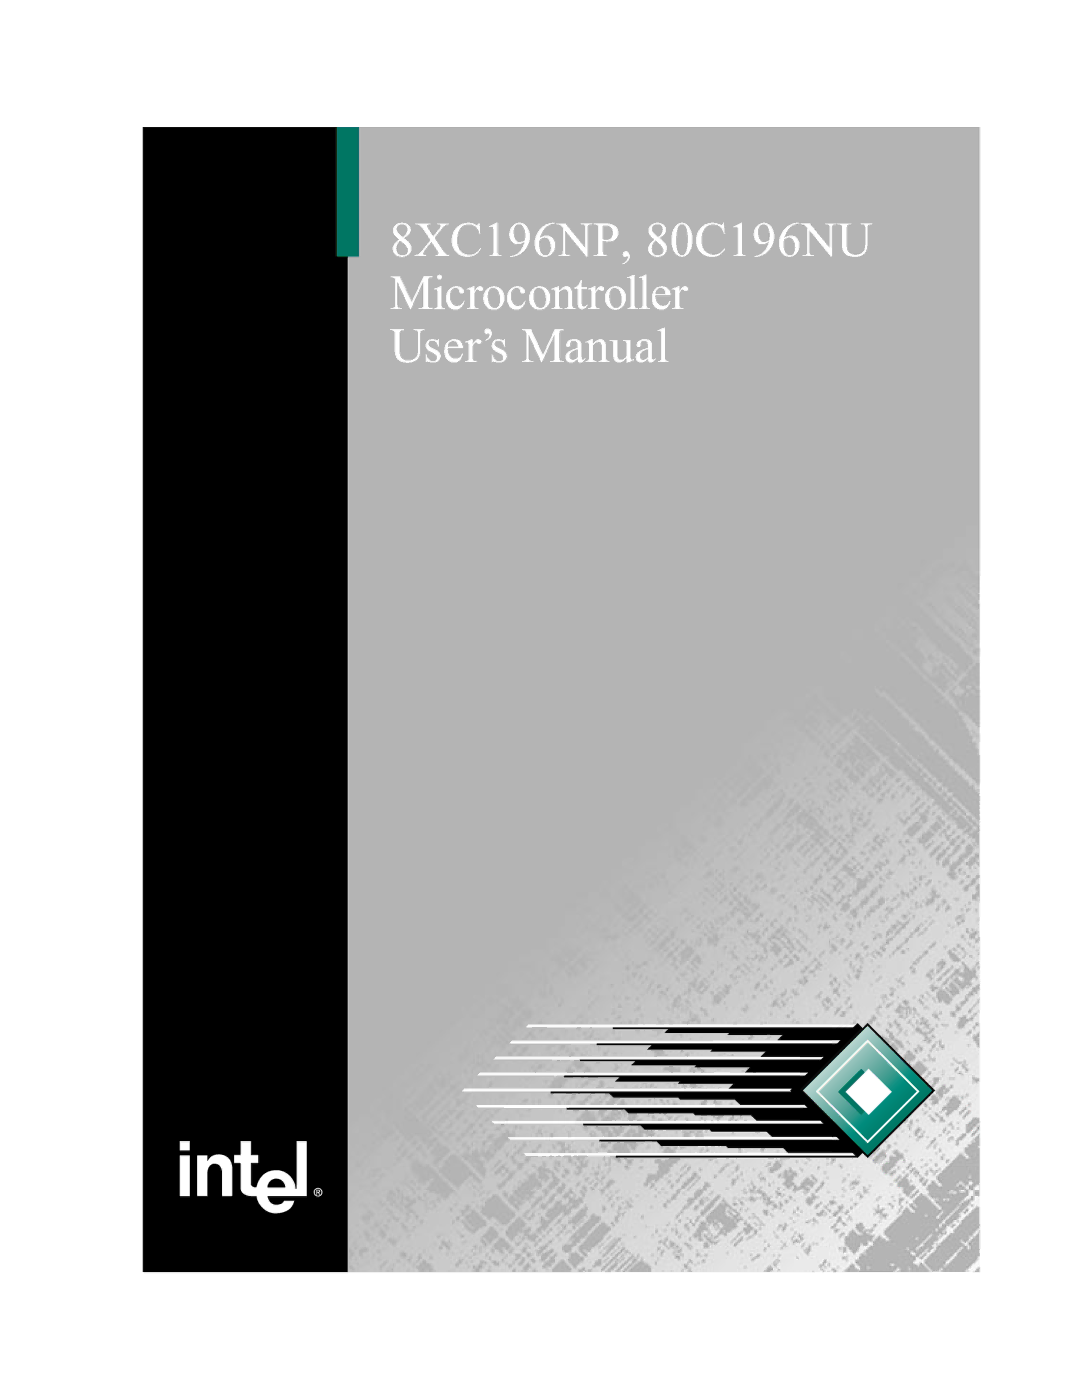 Intel manual 8XC196NP, 80C196NU Microcontroller User’ Manual 